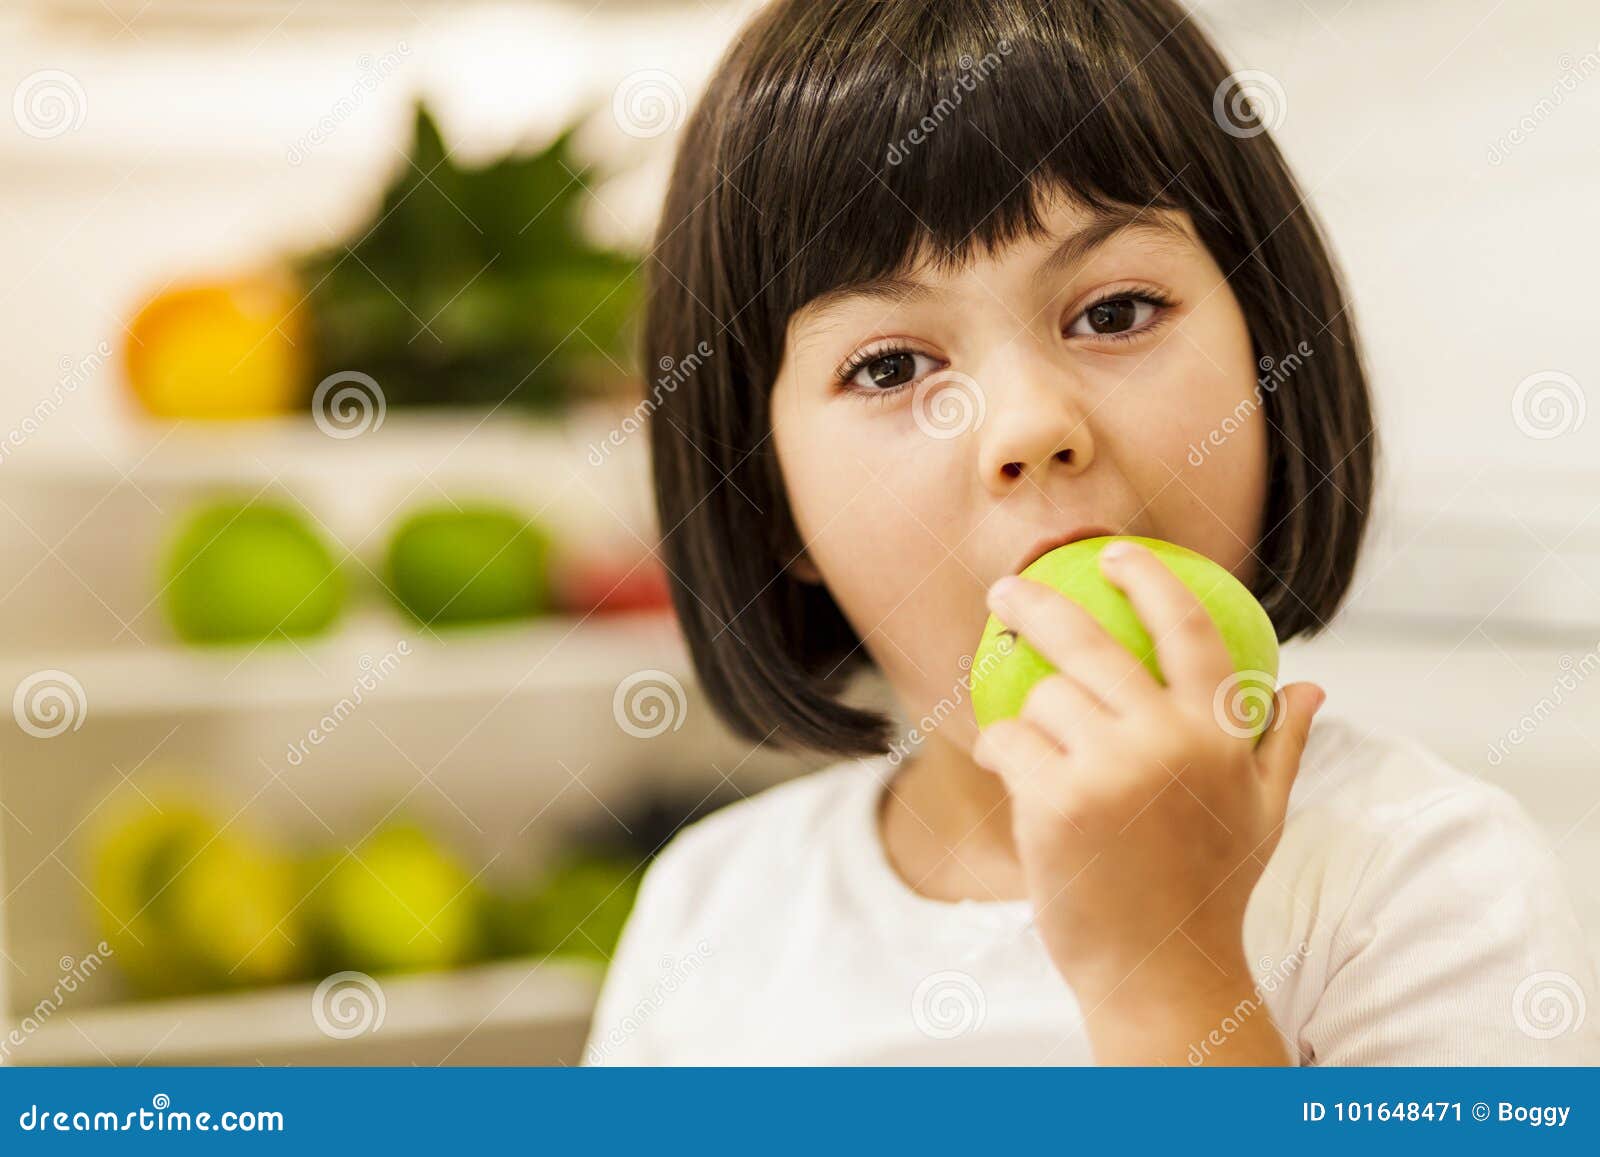 Cute Black Hair Little Girl Eating Green Apple Stock Image - Image of  portrait, nutrition: 101648471